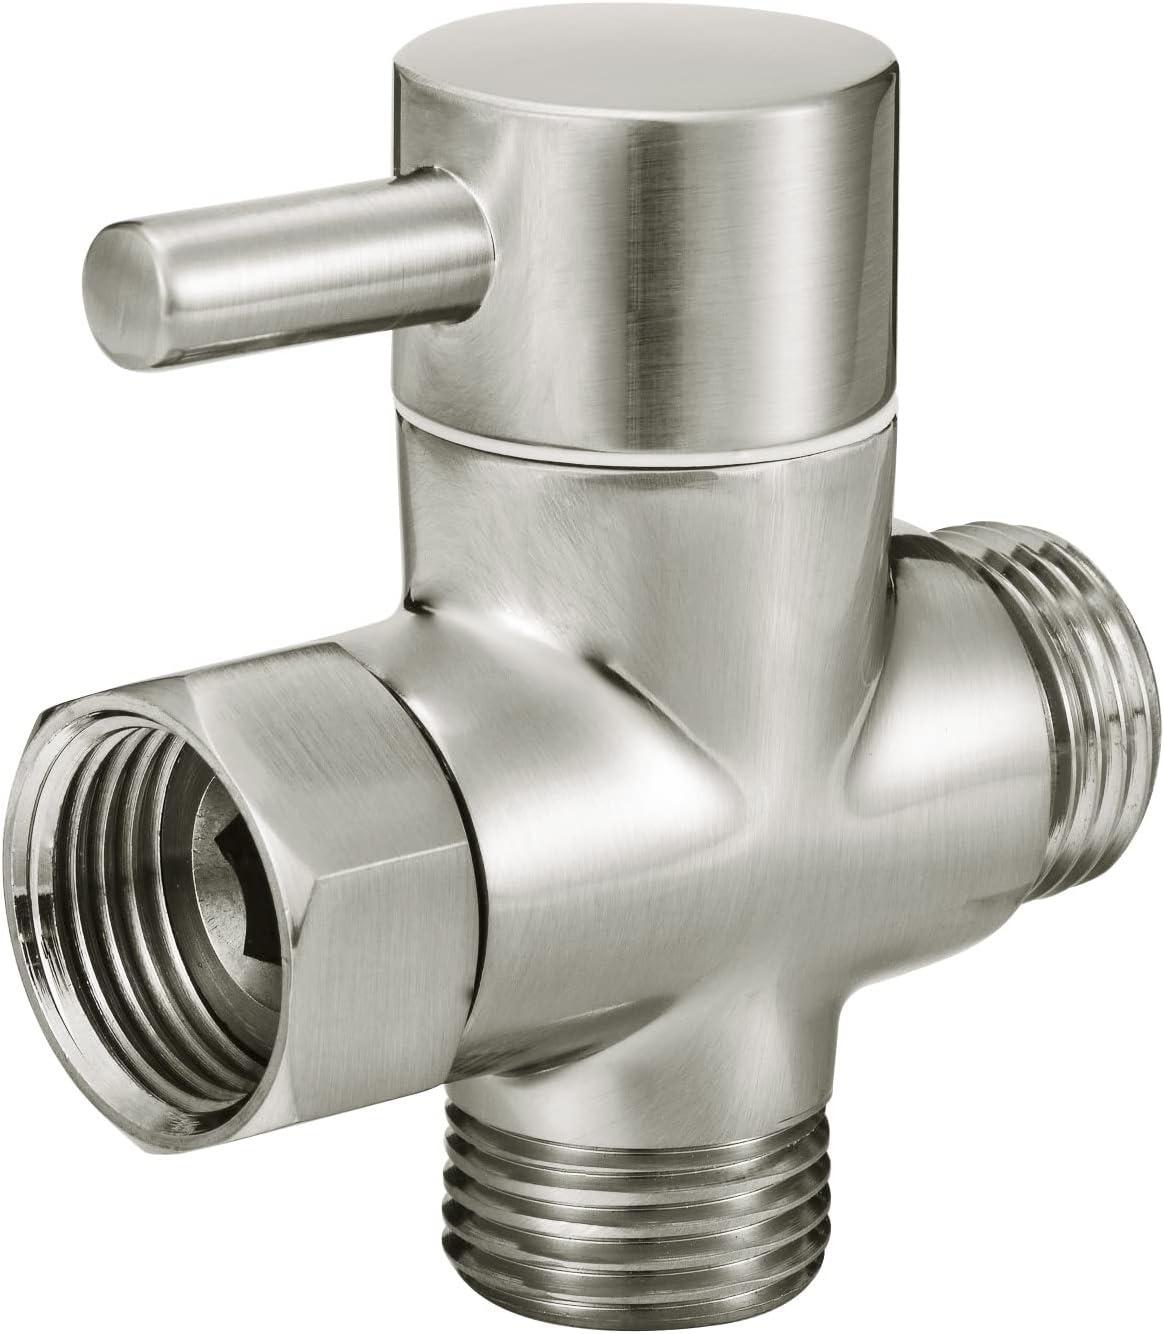 Sneatup Solid Brass 3-way G1/2 Shower Diverter